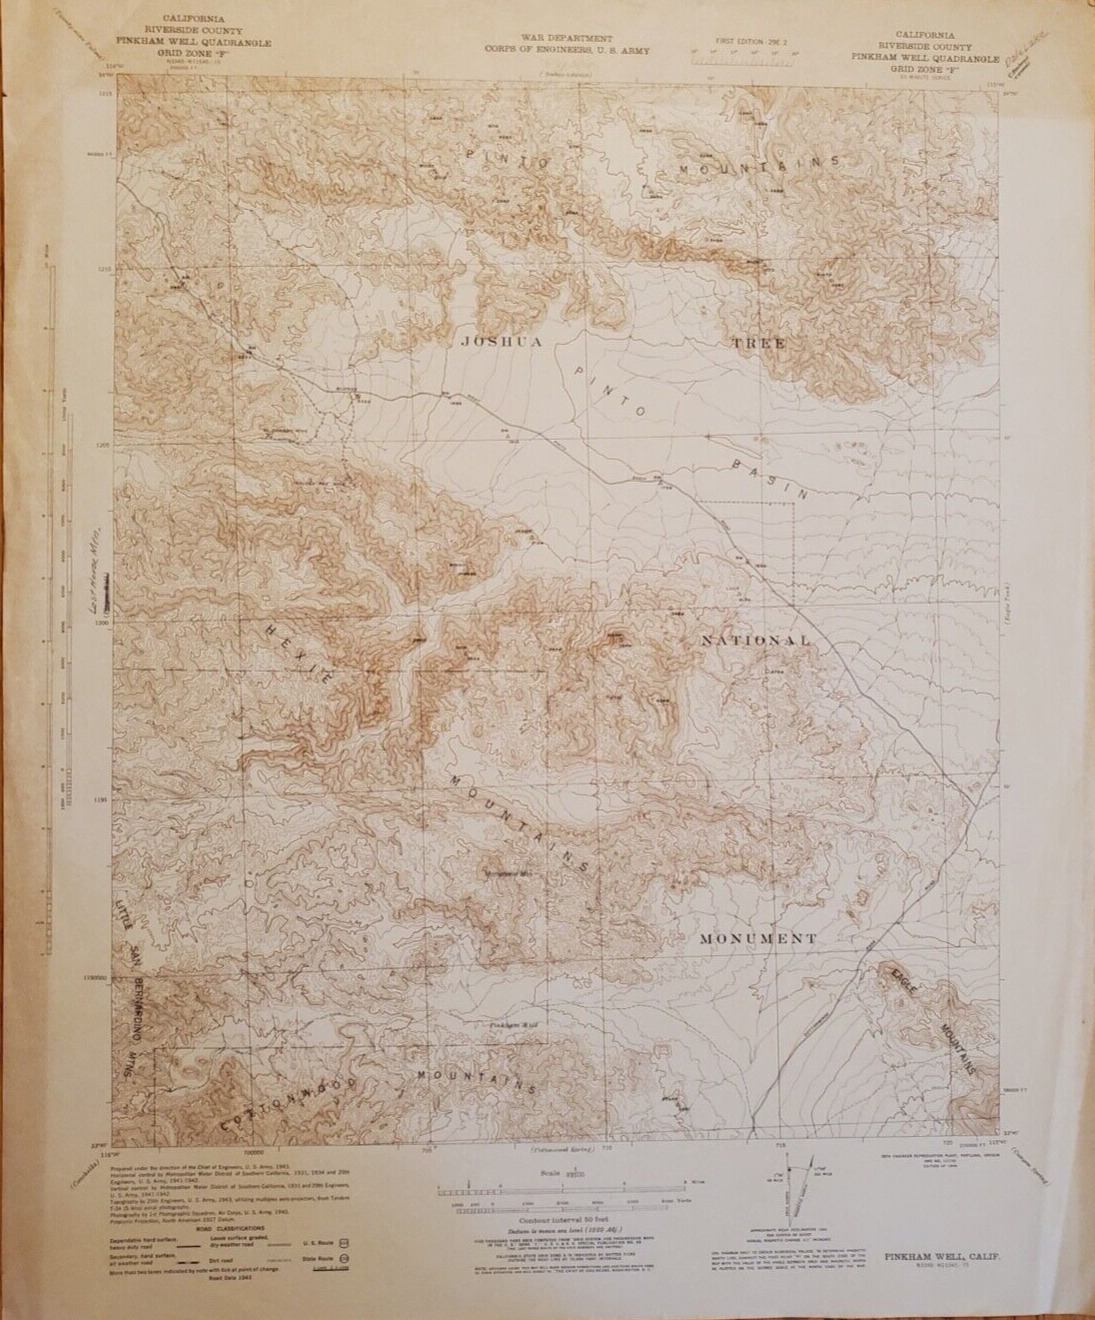 1944 VTG Topo Map WAR DEPT Pinkham Well Quadrangle, CA Grid Zone \